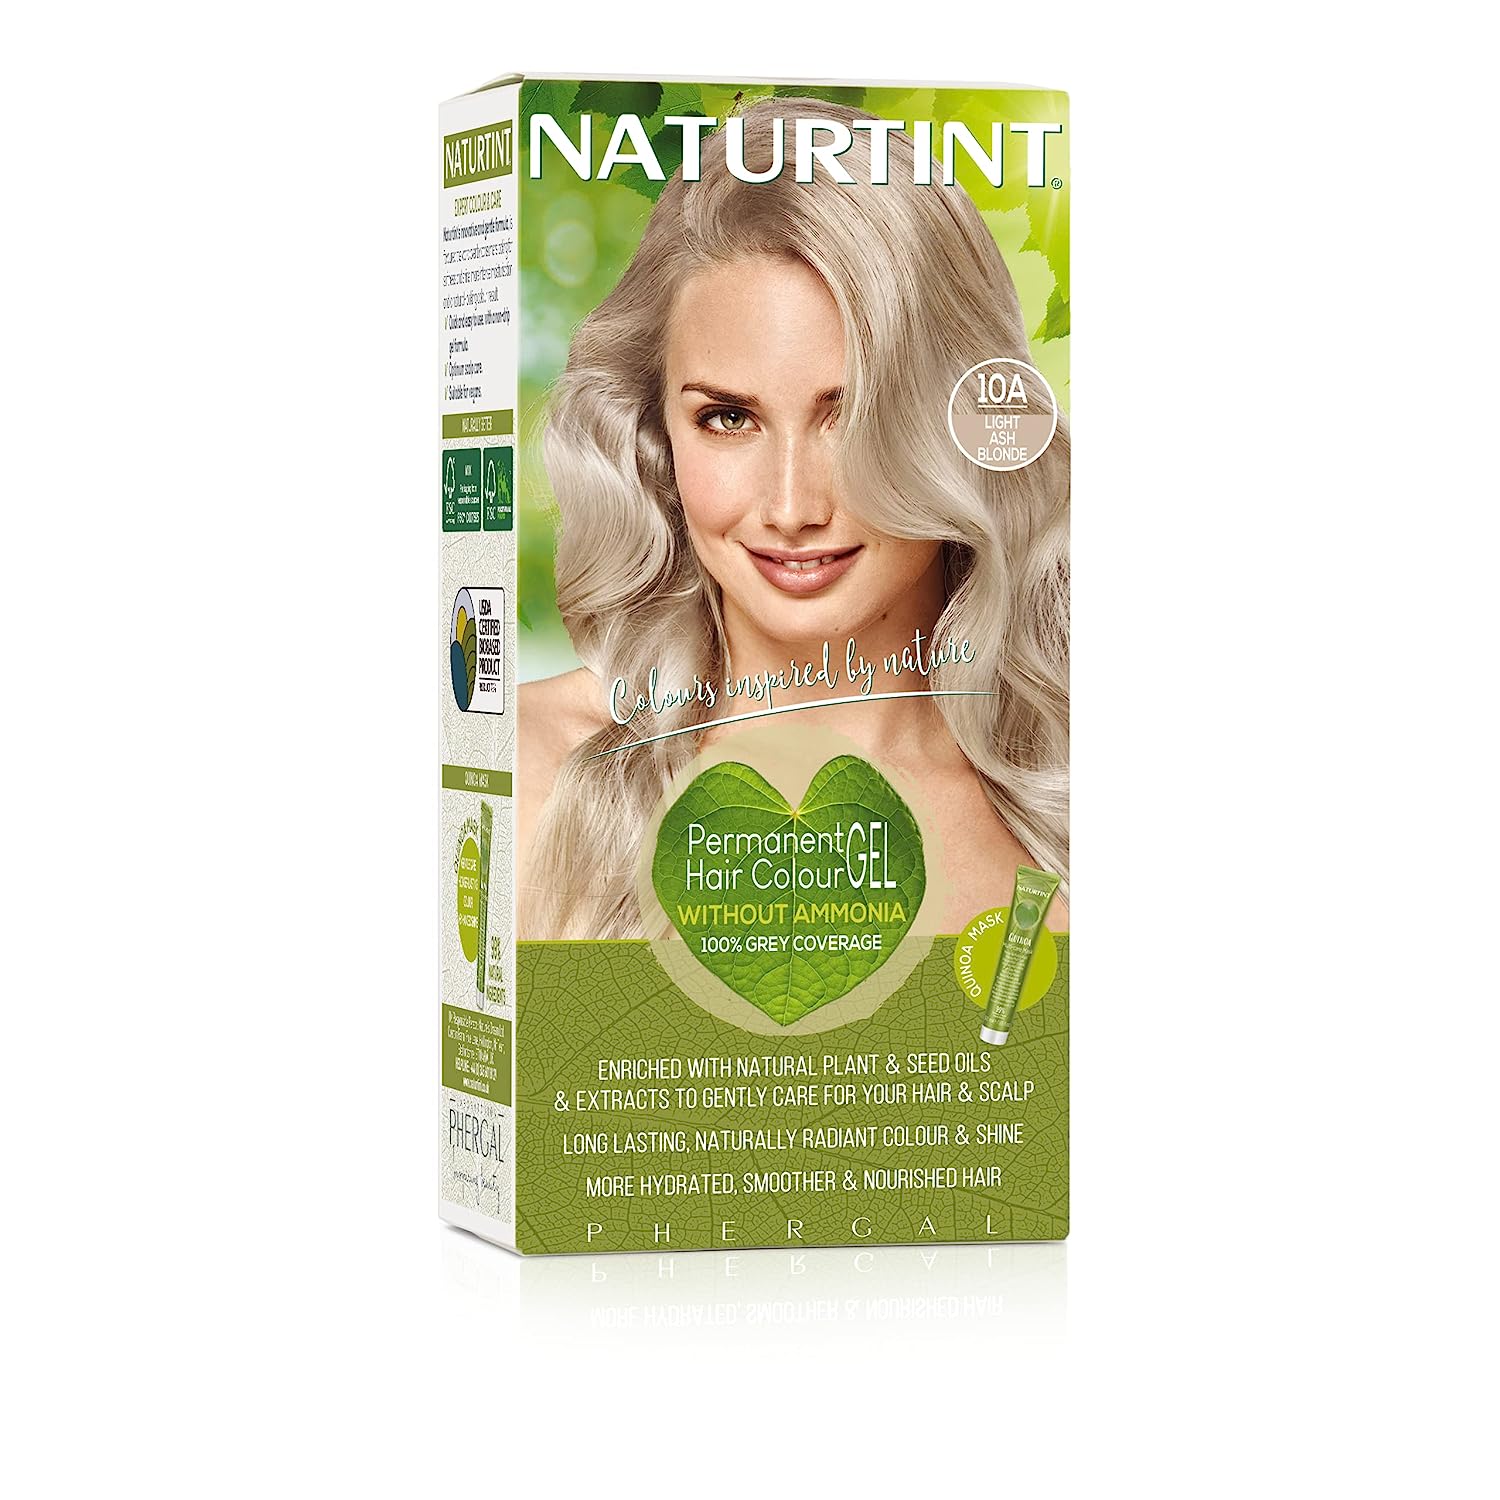 Naturtint Permanent Hair Color 10A Light Ash Blonde [...]